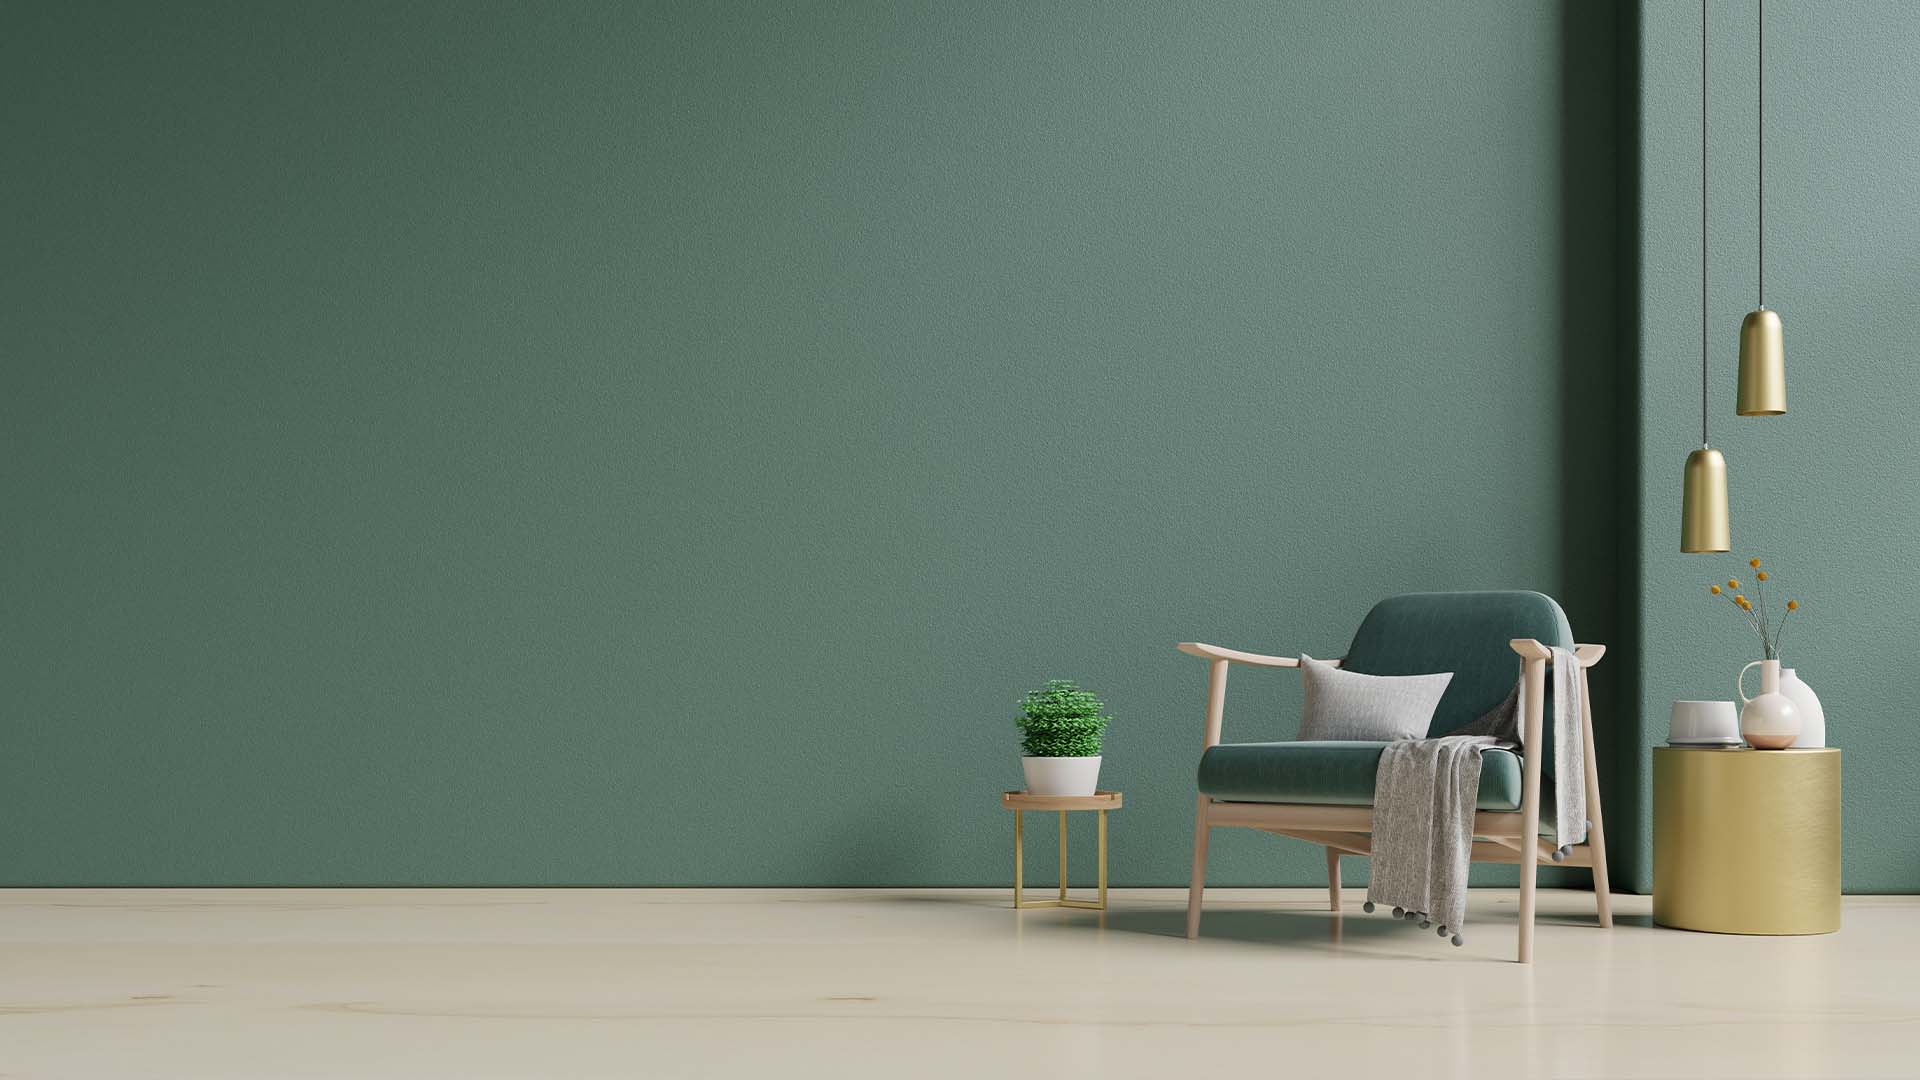 Mur peint en vert devant fauteuil